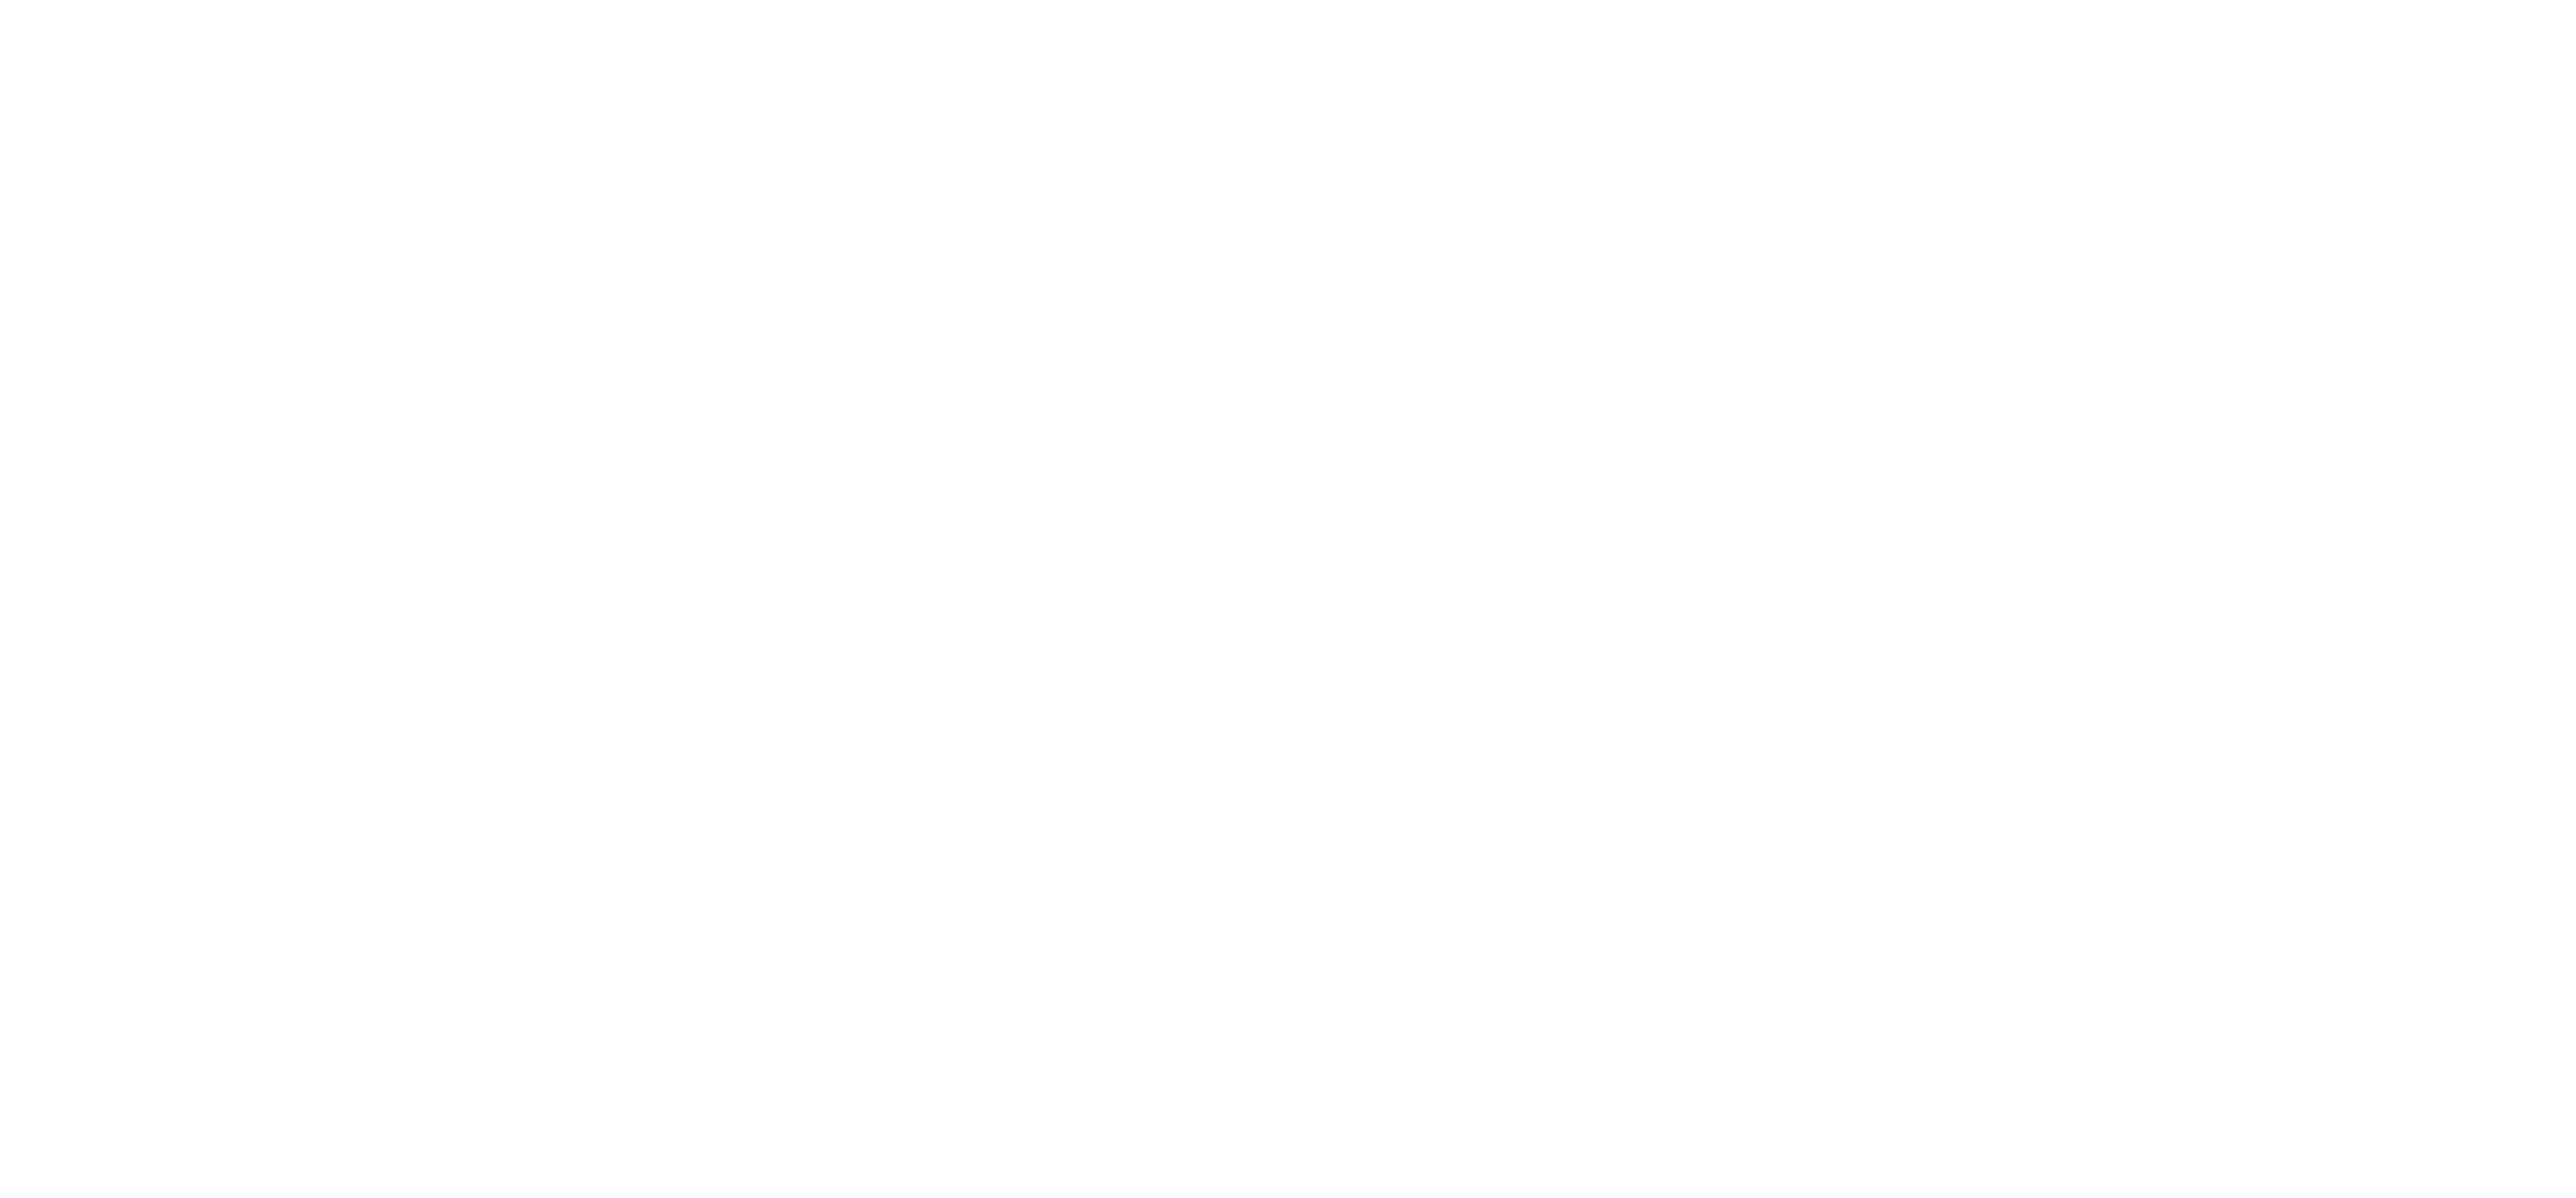 SRI Quality System Registrar